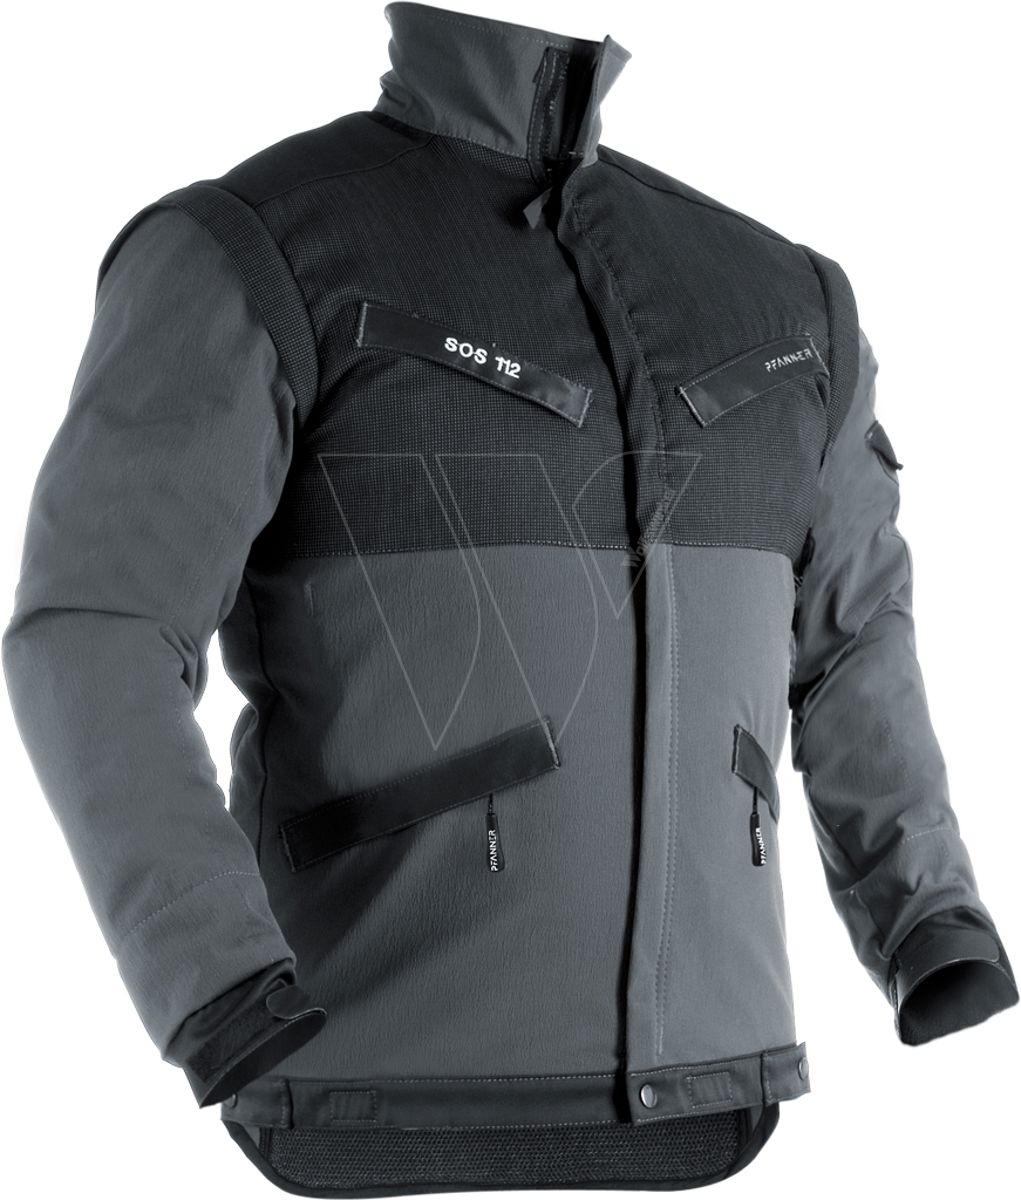 Pfanner klimaair® reflex jacket grau xl